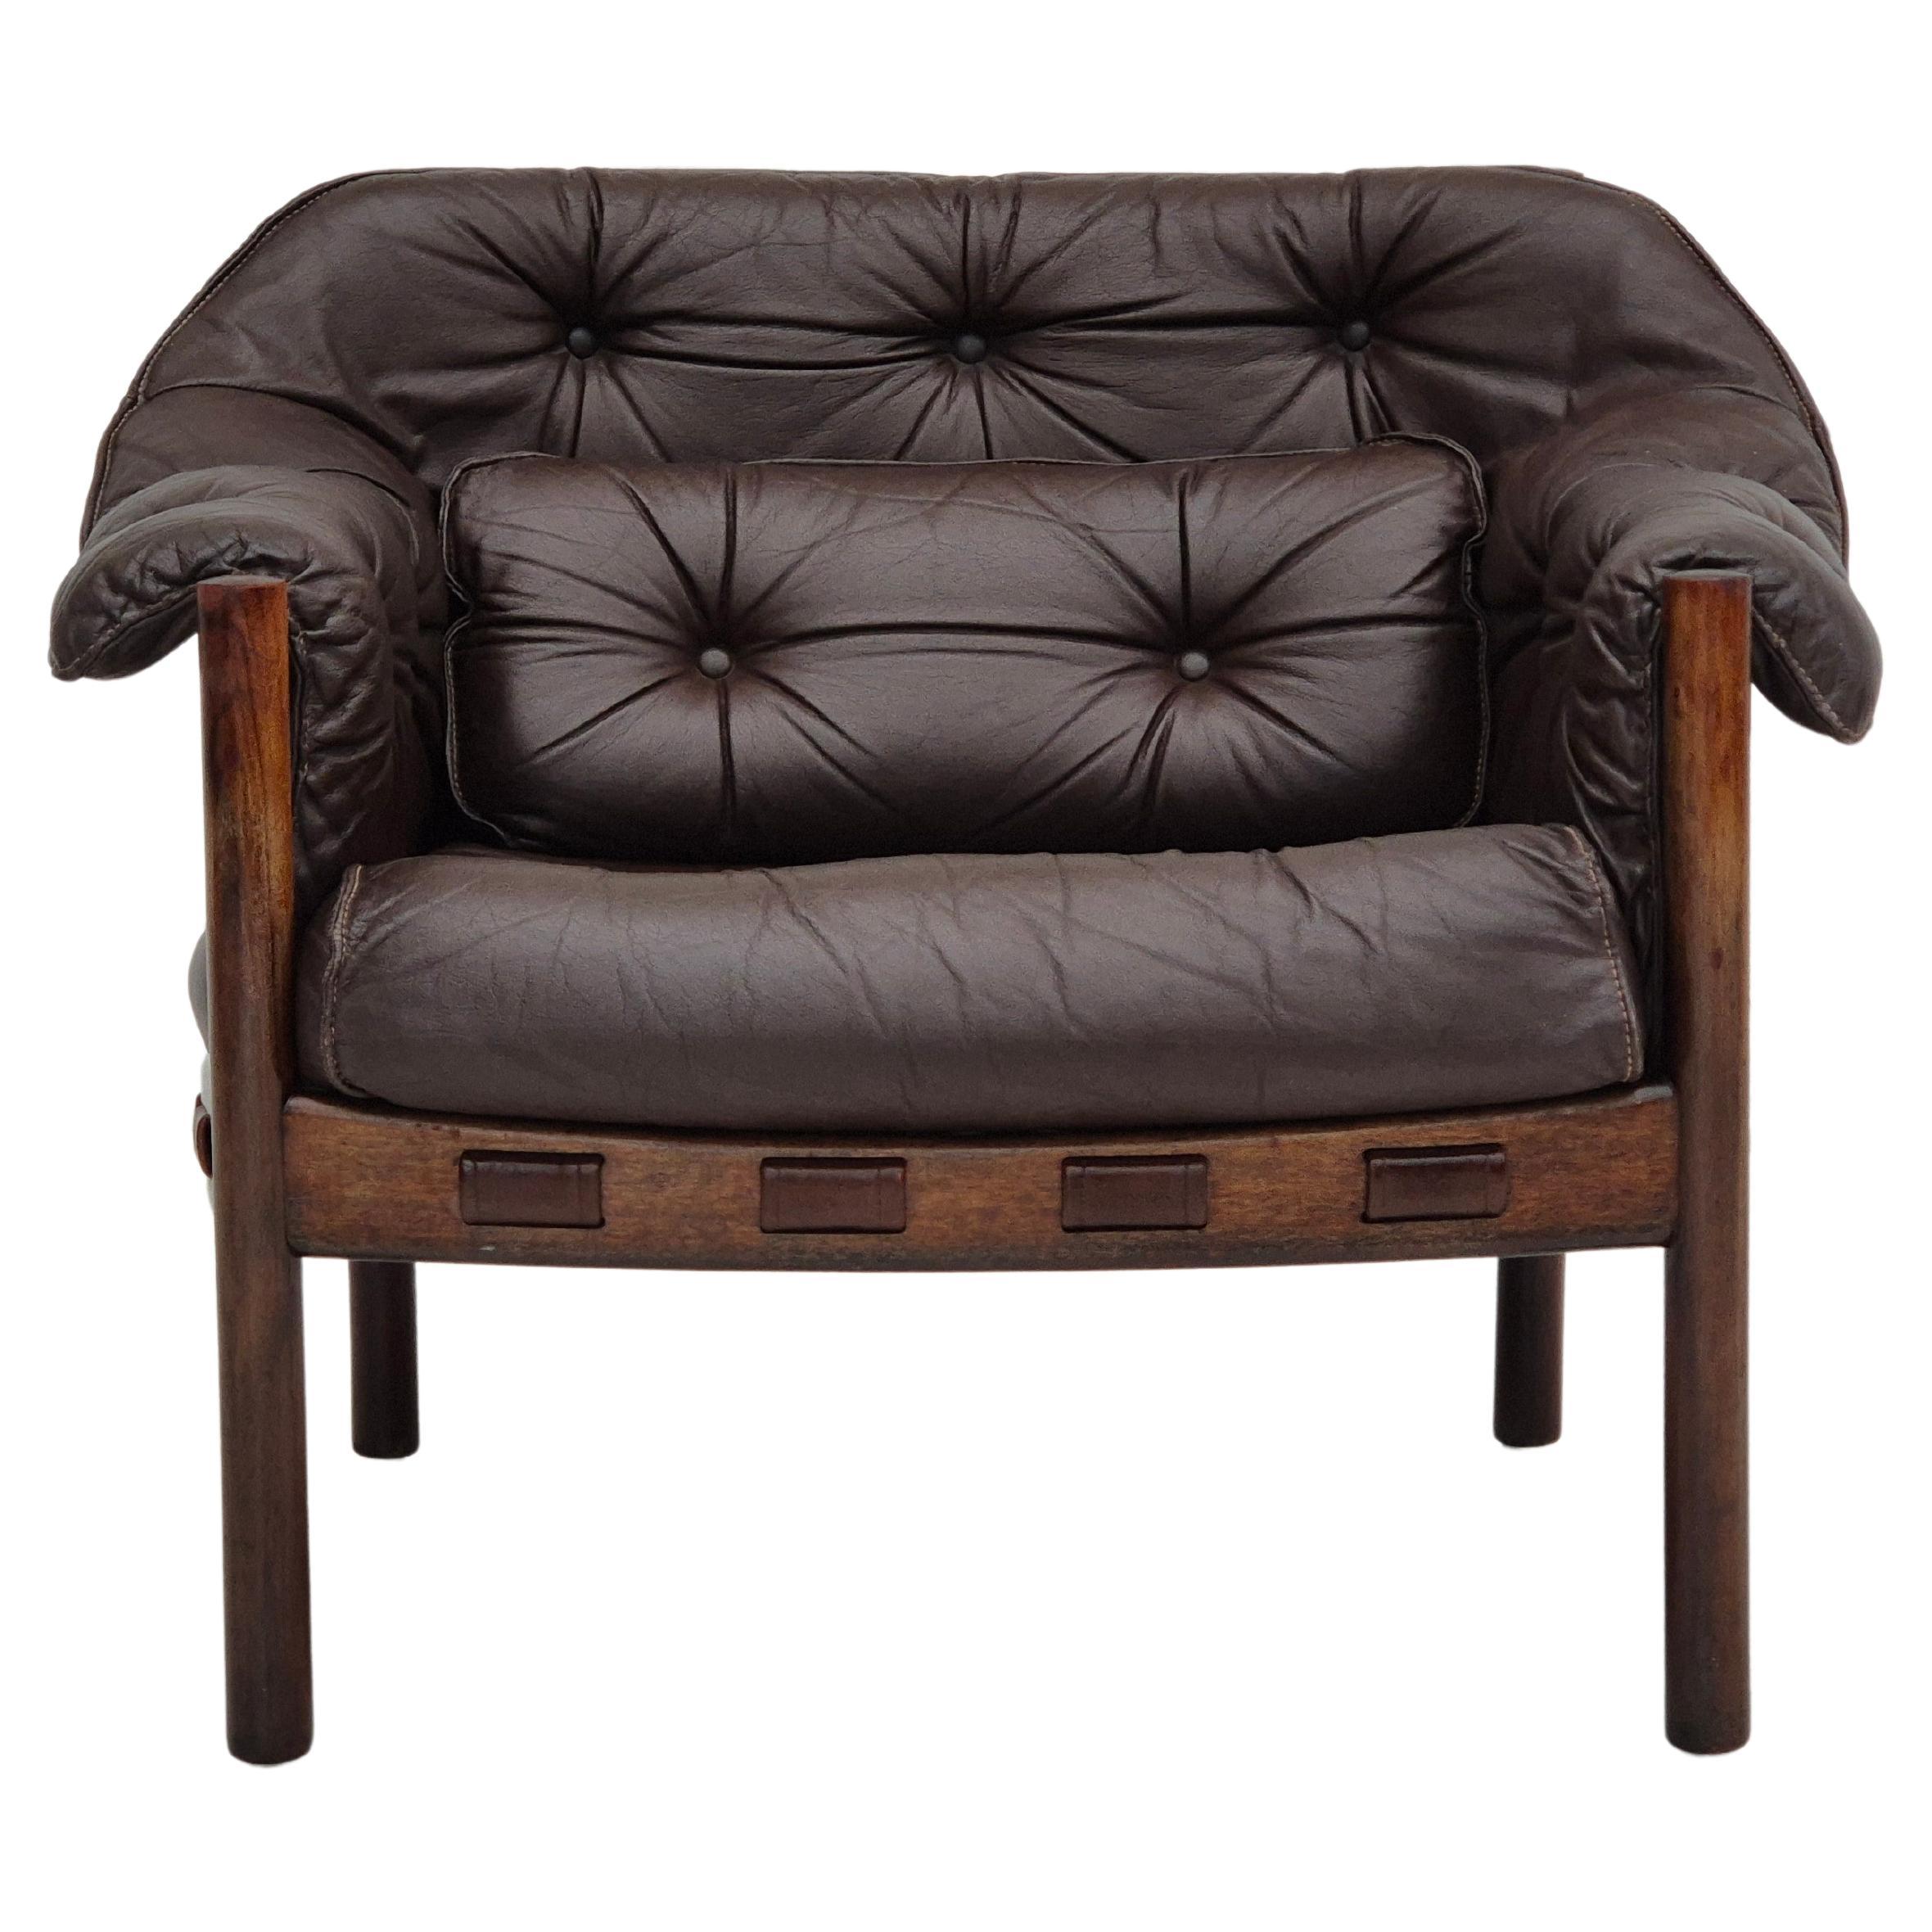 1970s, Scandinavian design by Arne Norell, lounge chair, original condition.